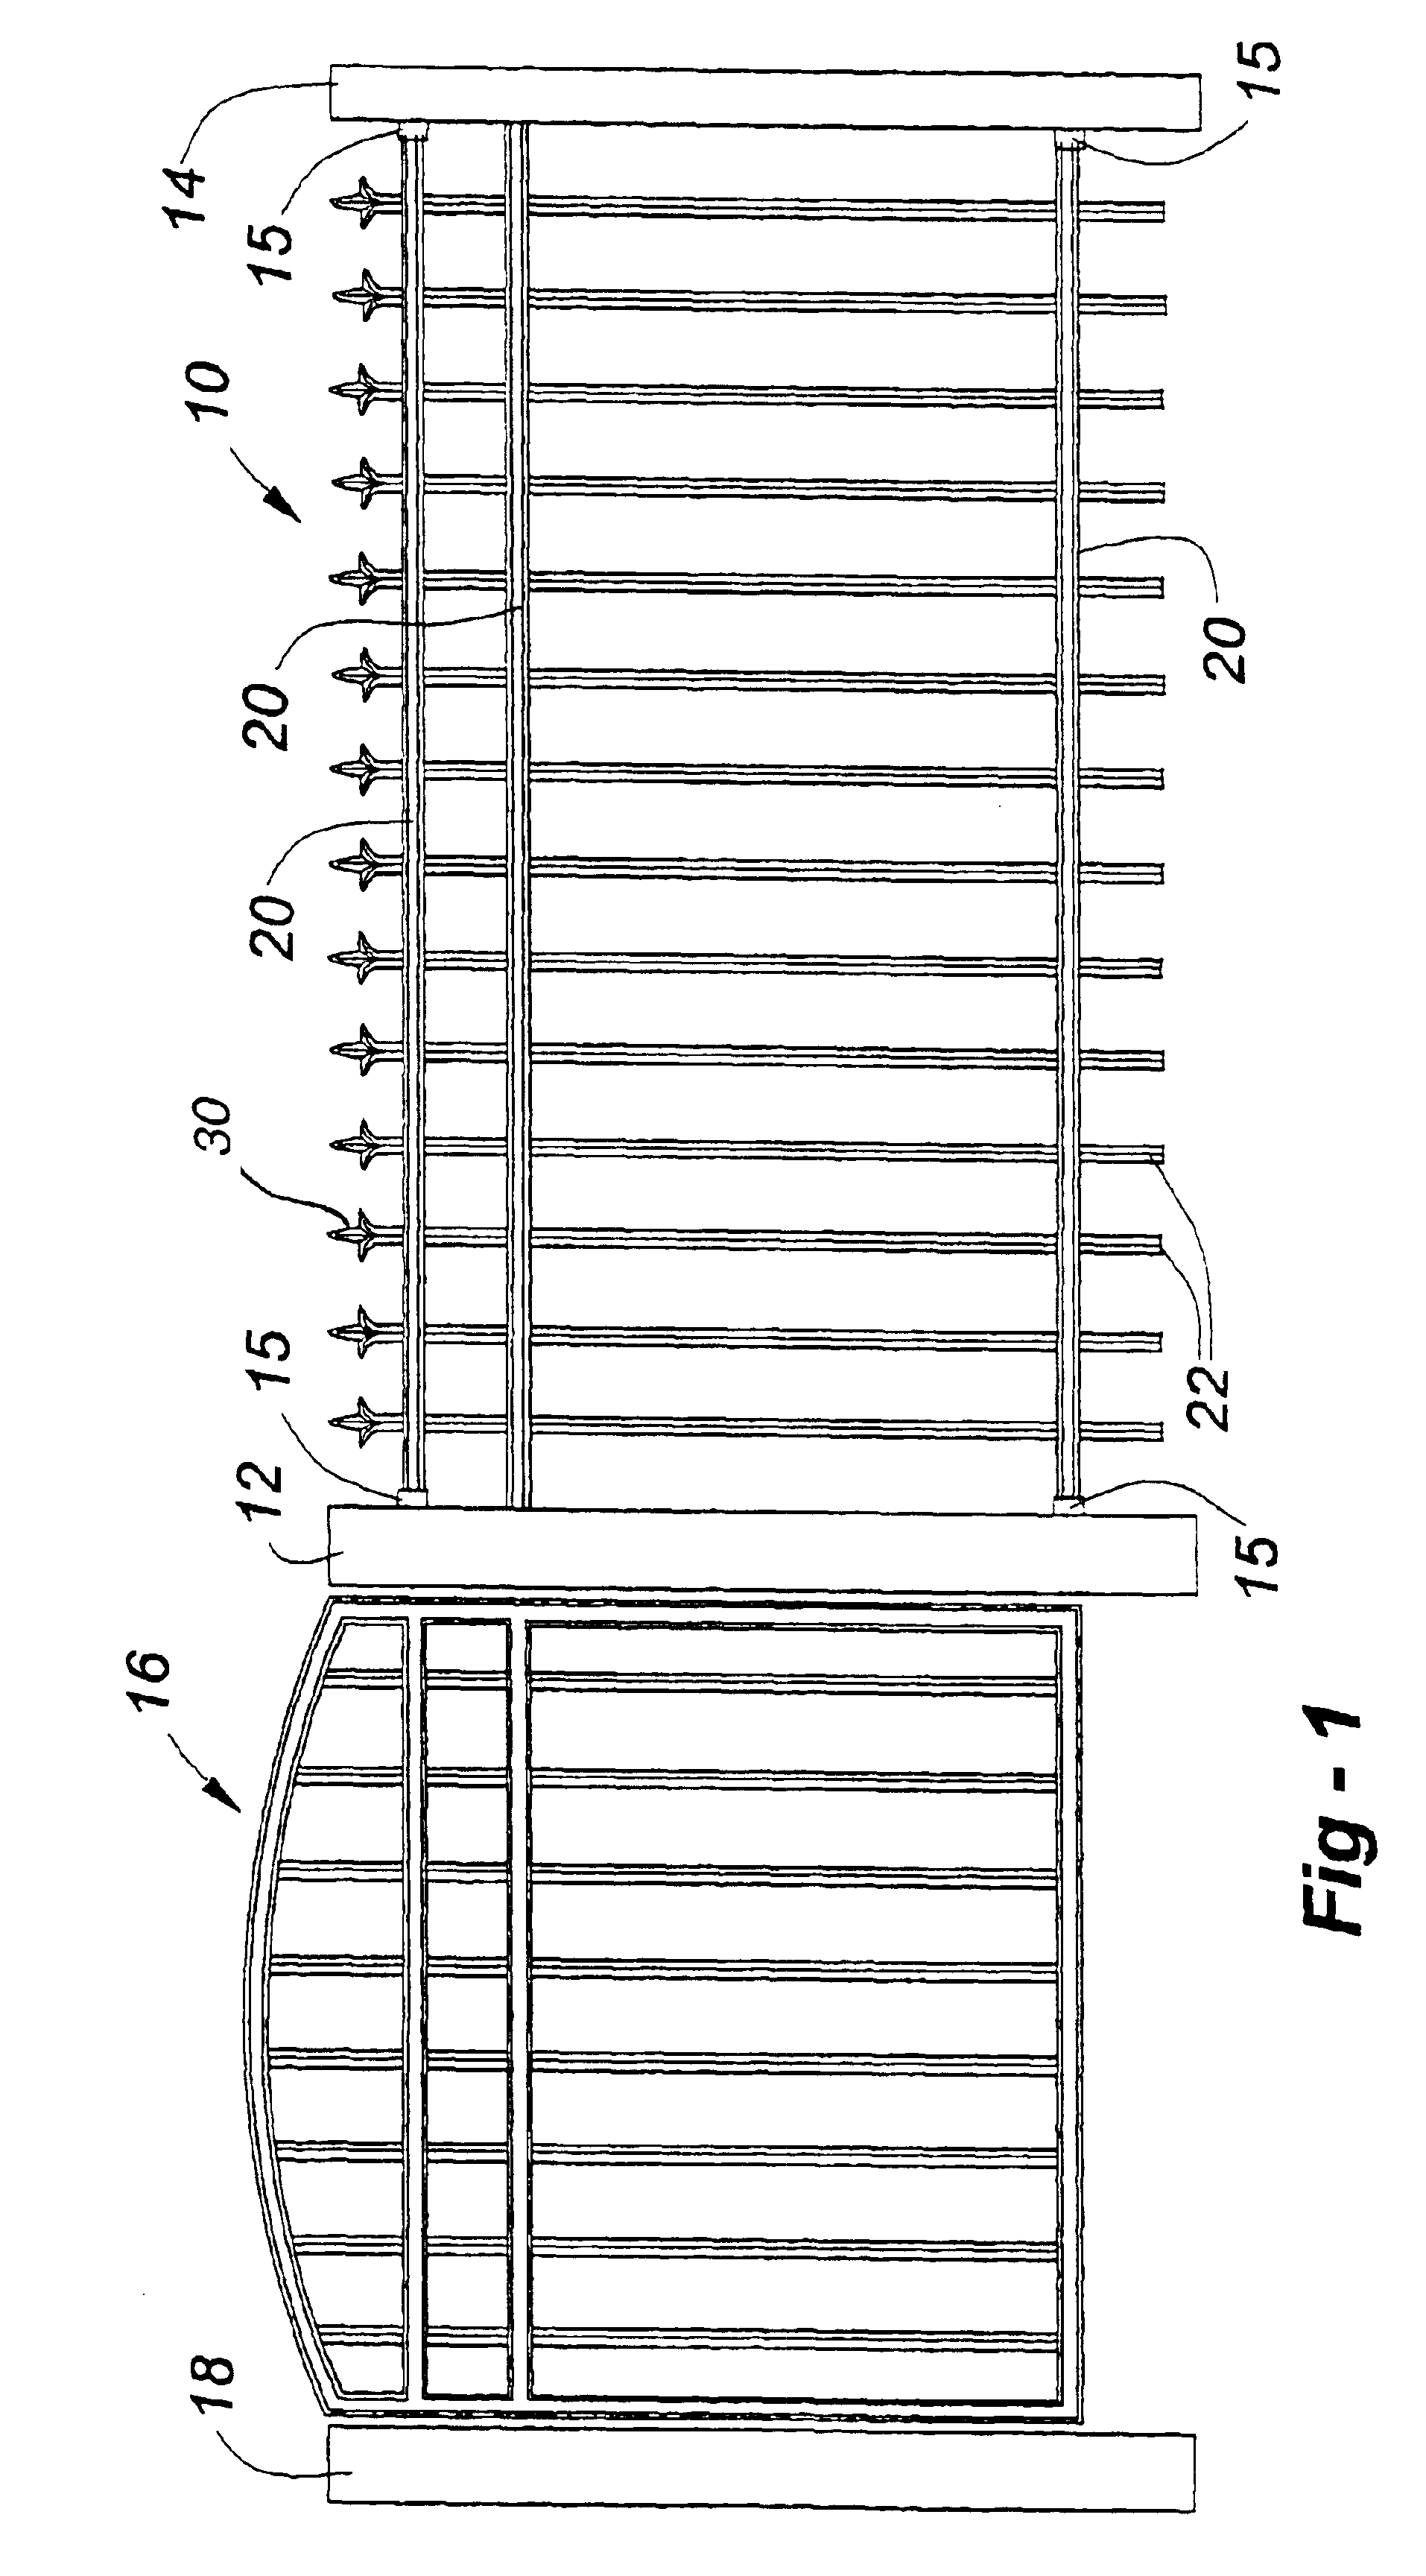 Plastic fencing simulative of wrought iron